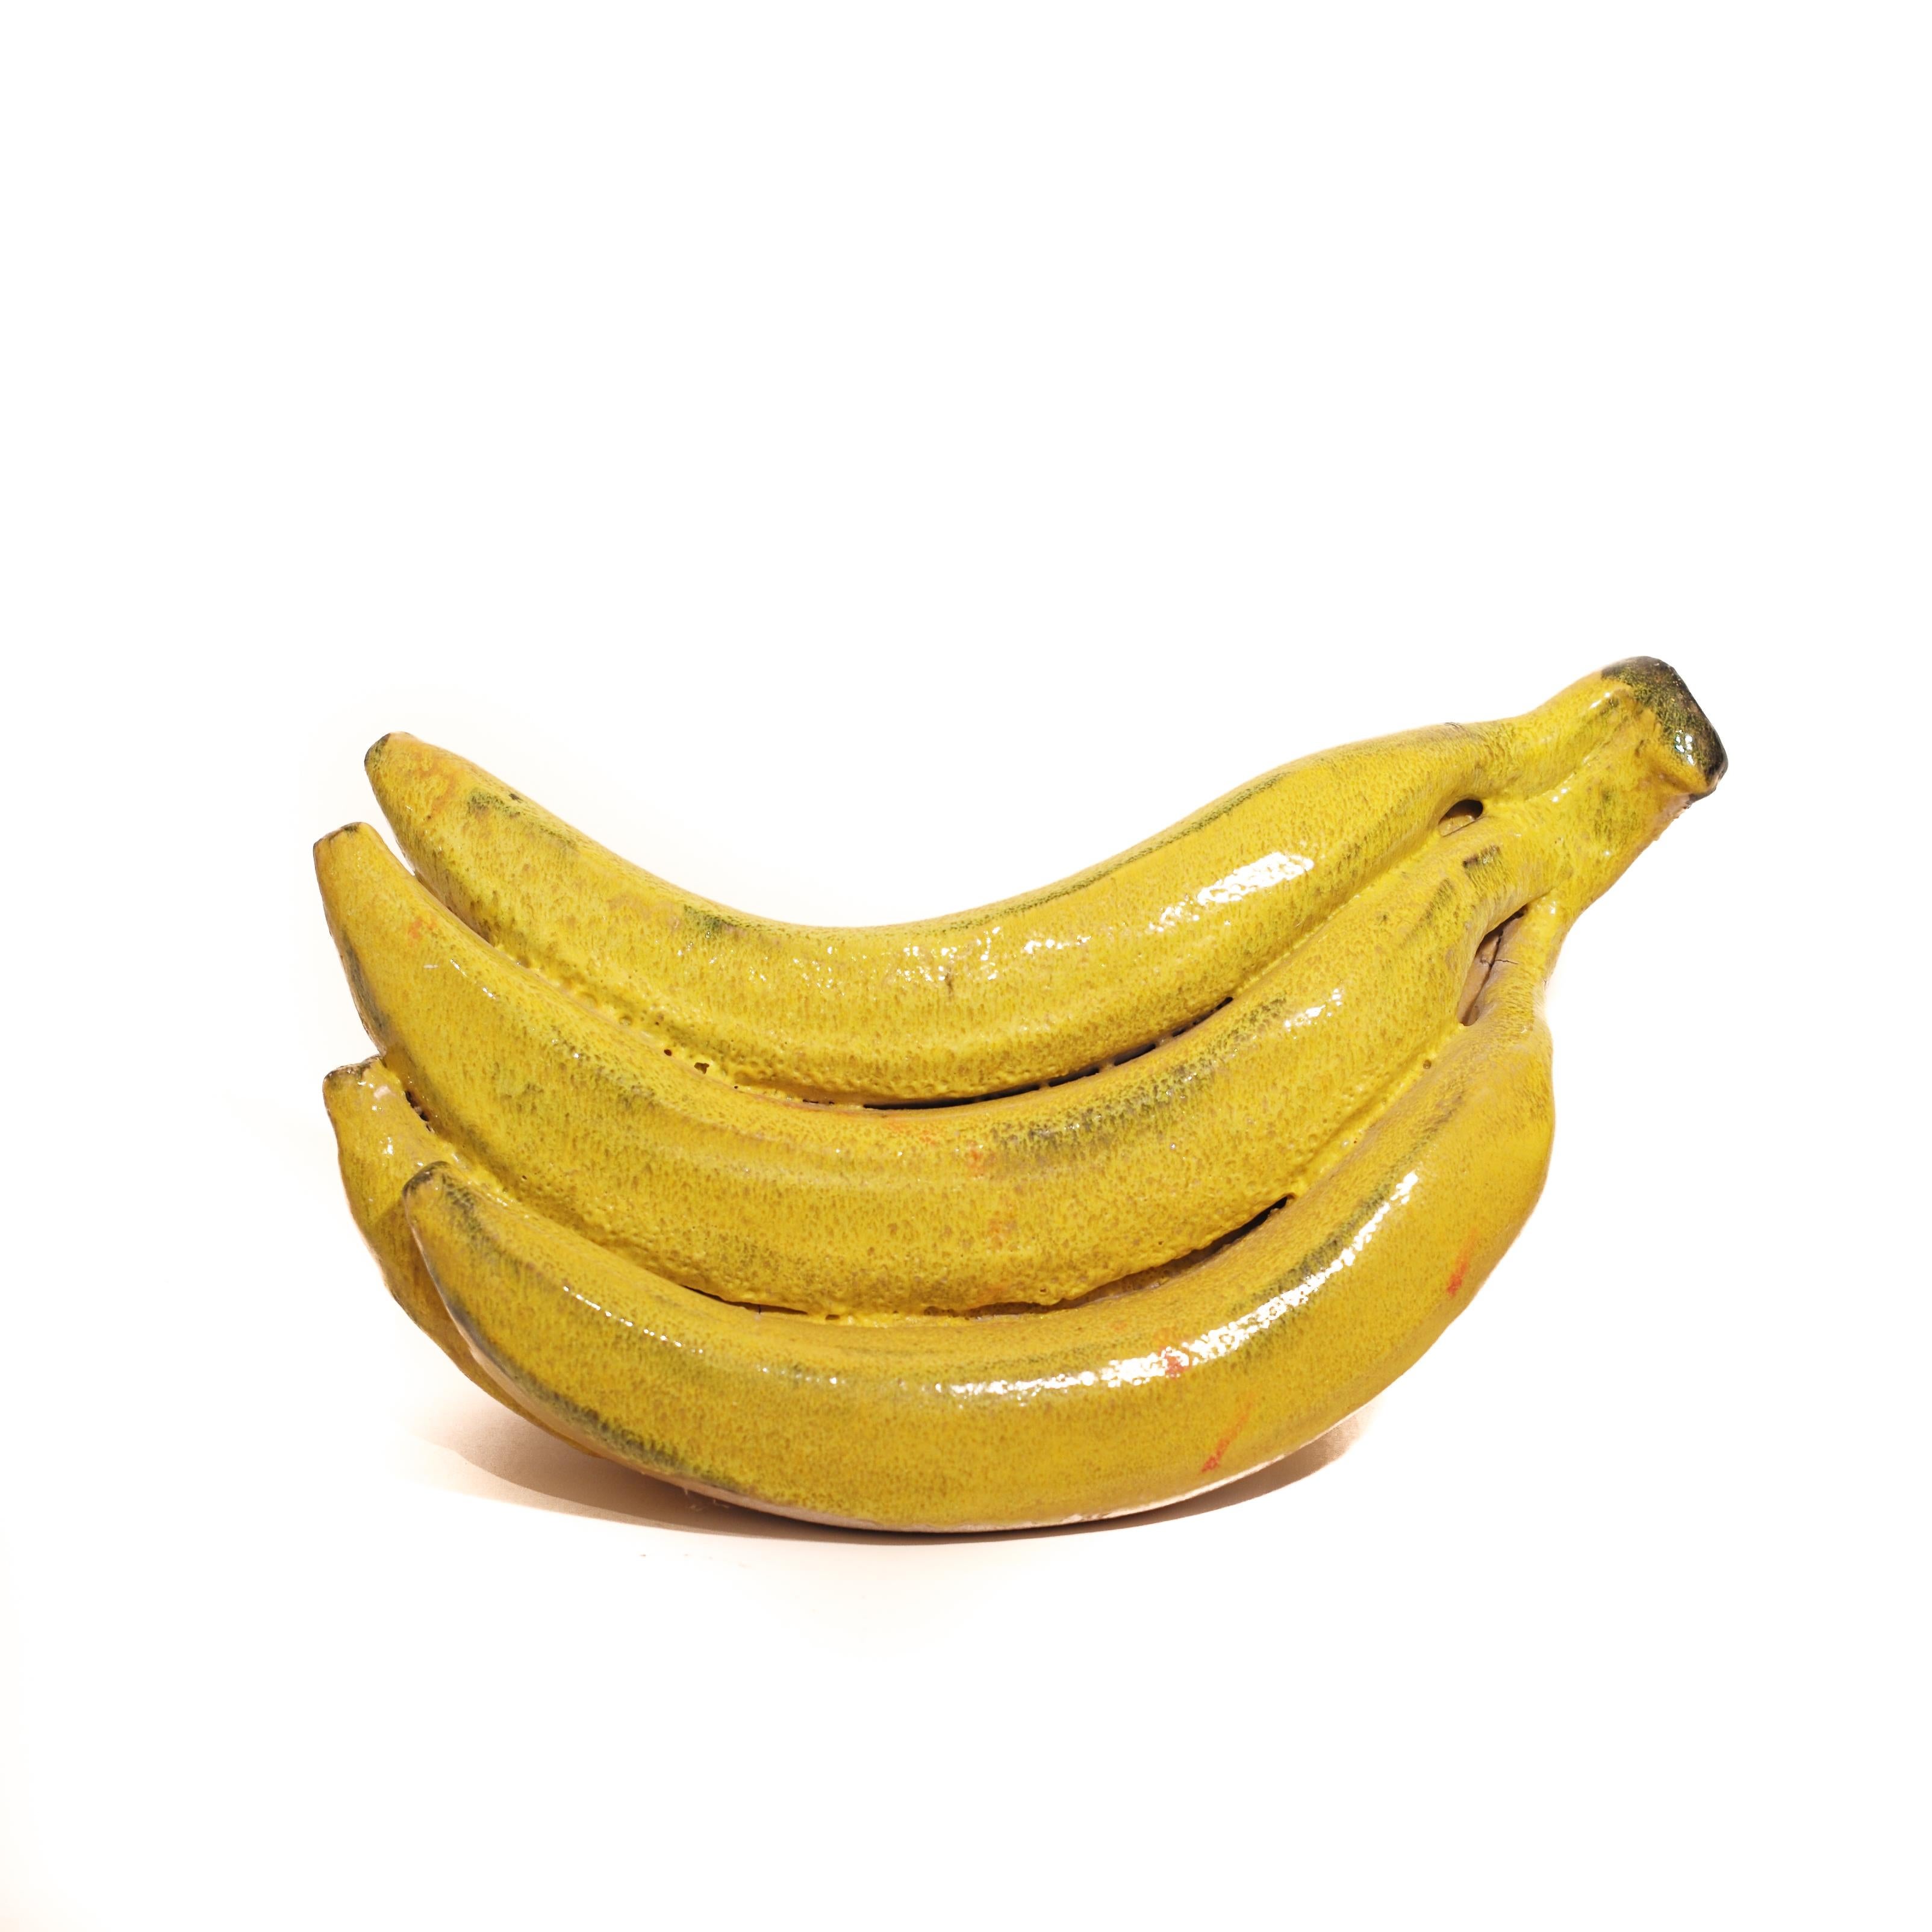 banana sculpture